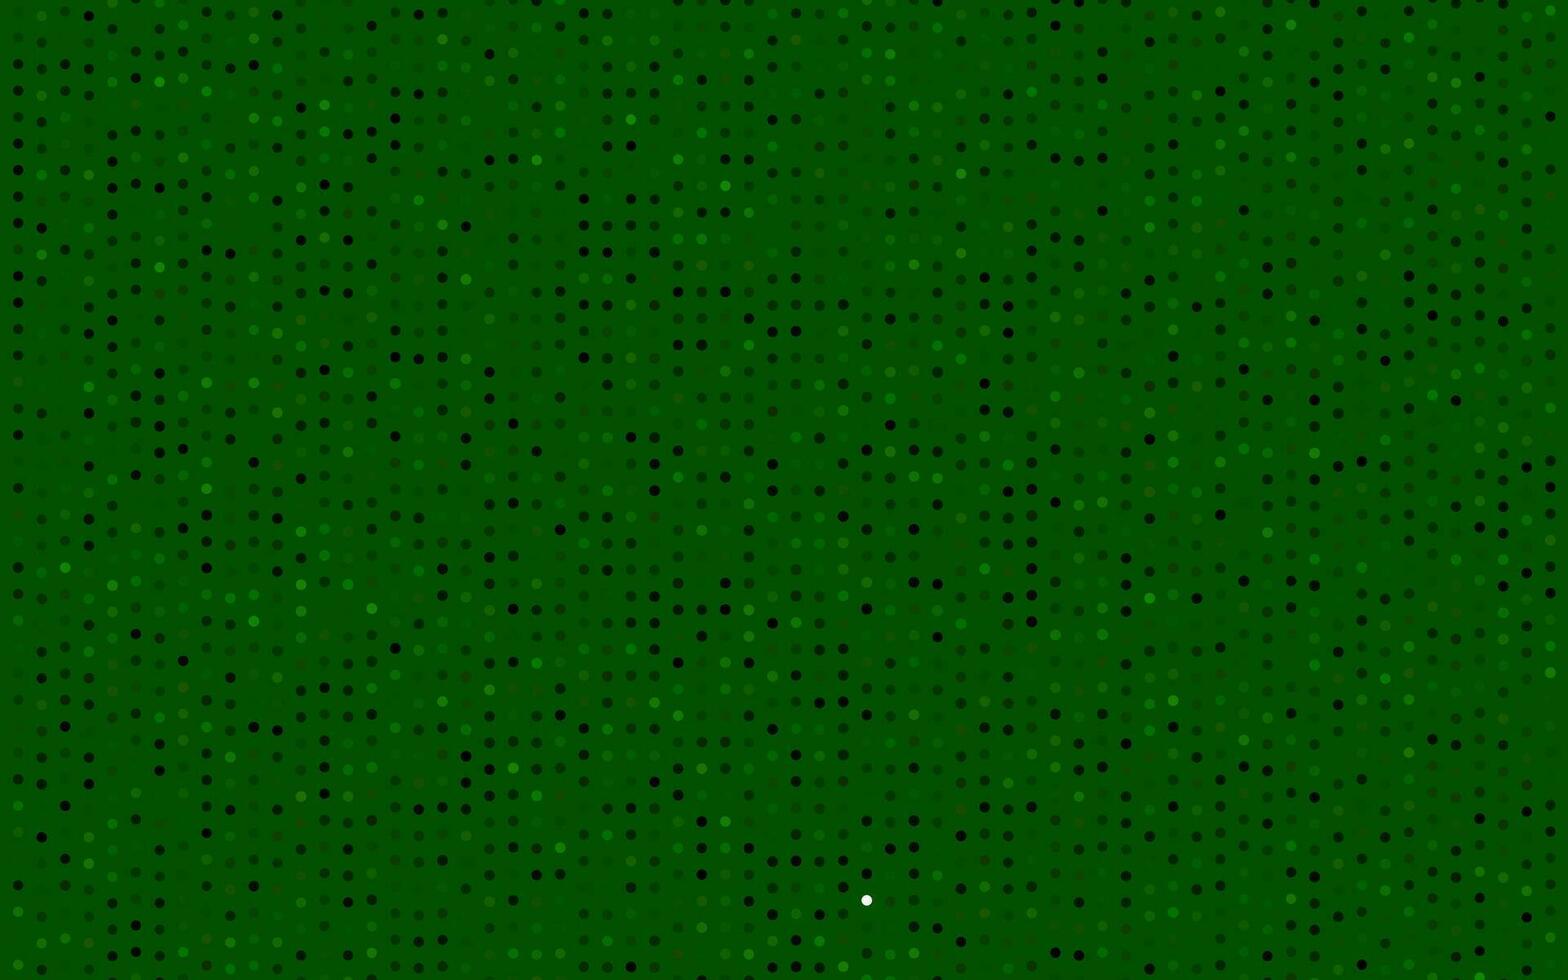 Dark Green vector pattern with spheres.